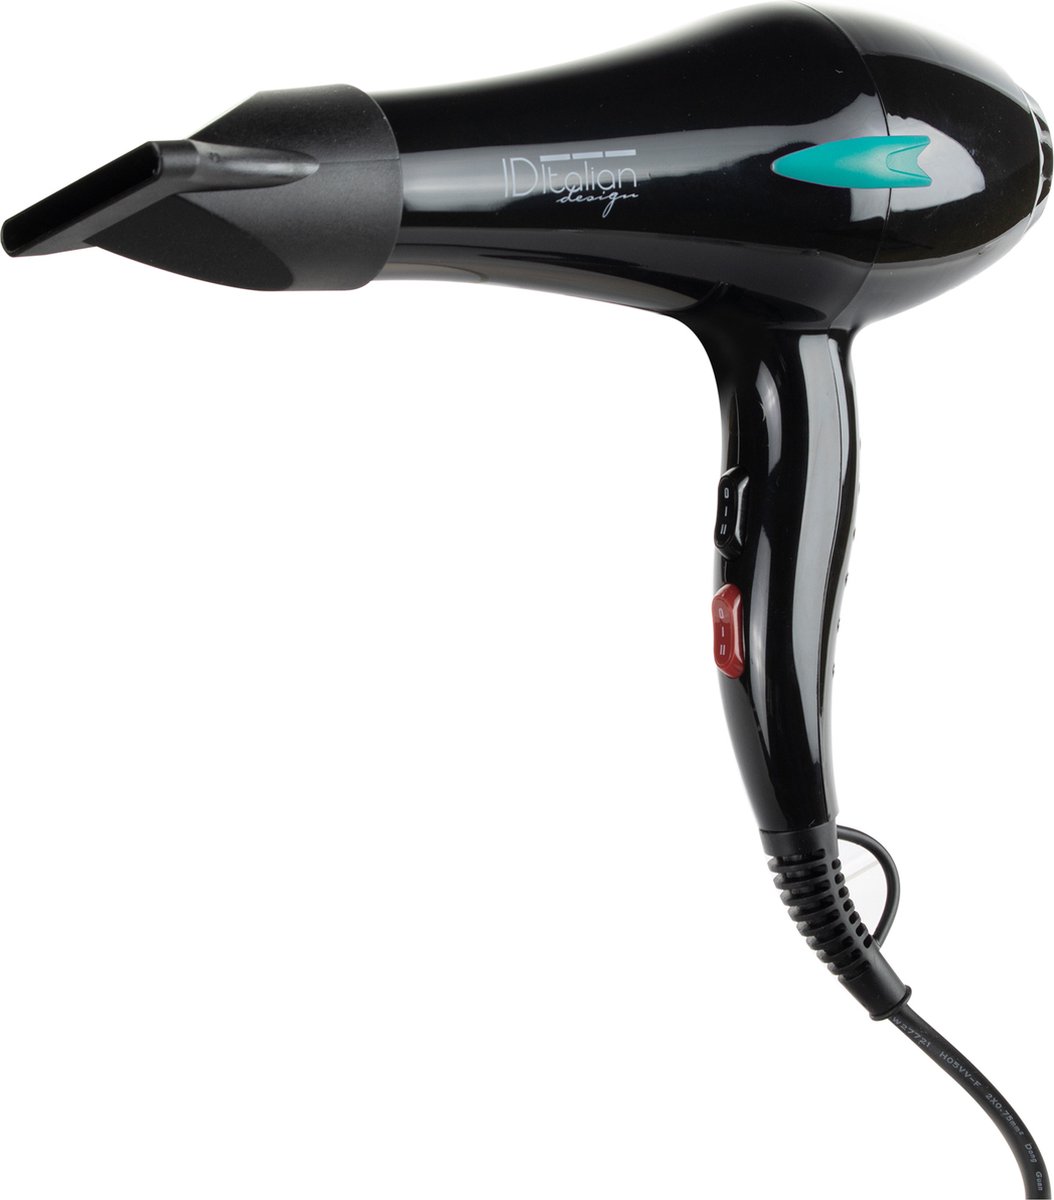 Id Italian Professional Hair Dryver Elite 2200w 1 U